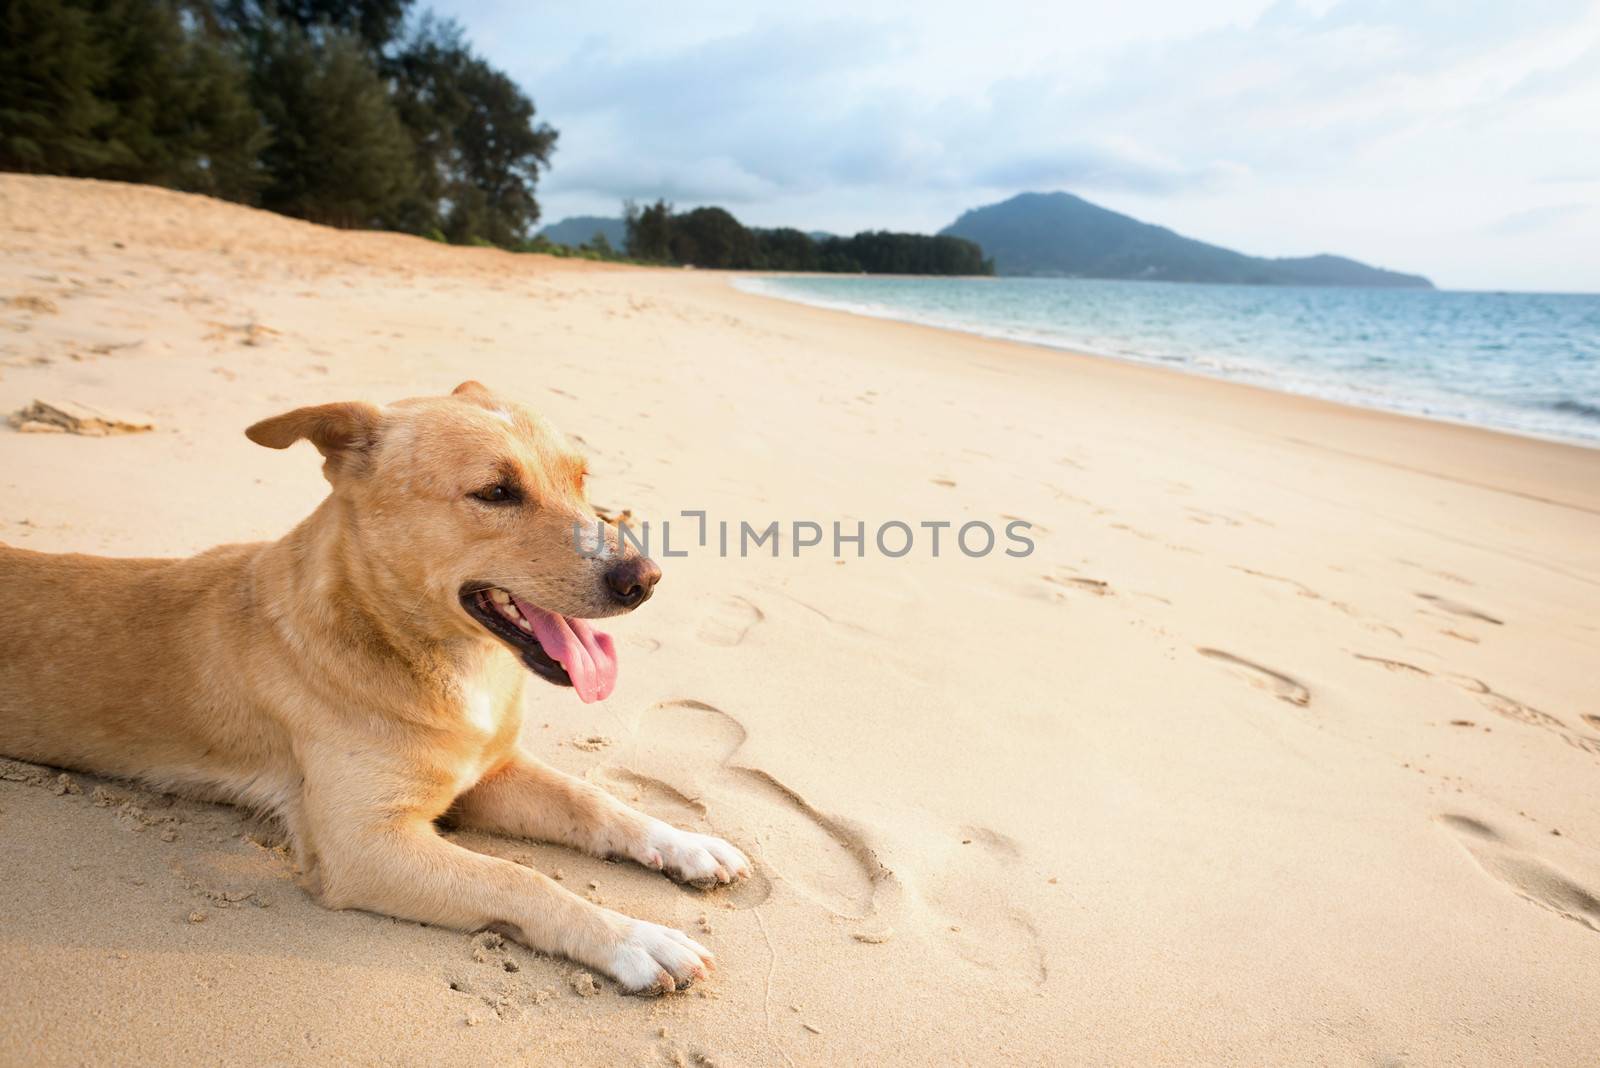 Dog relaxing on sand tropical beach near the blue